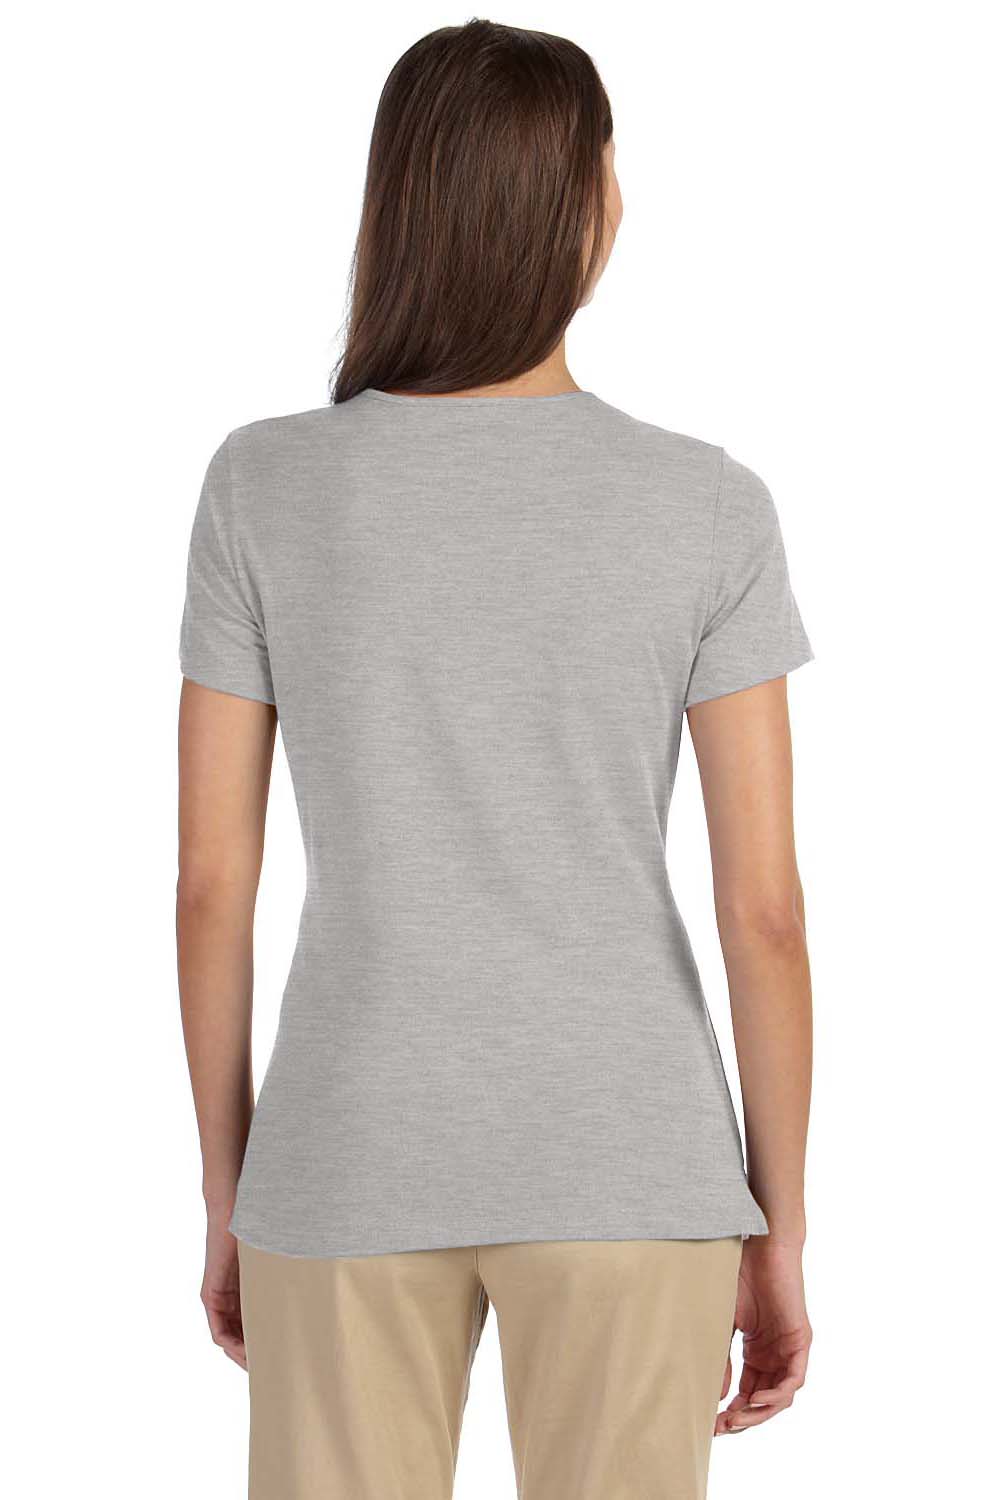 Devon & Jones DP182W Womens Perfect Fit Short Sleeve Crewneck T-Shirt Heather Grey Back